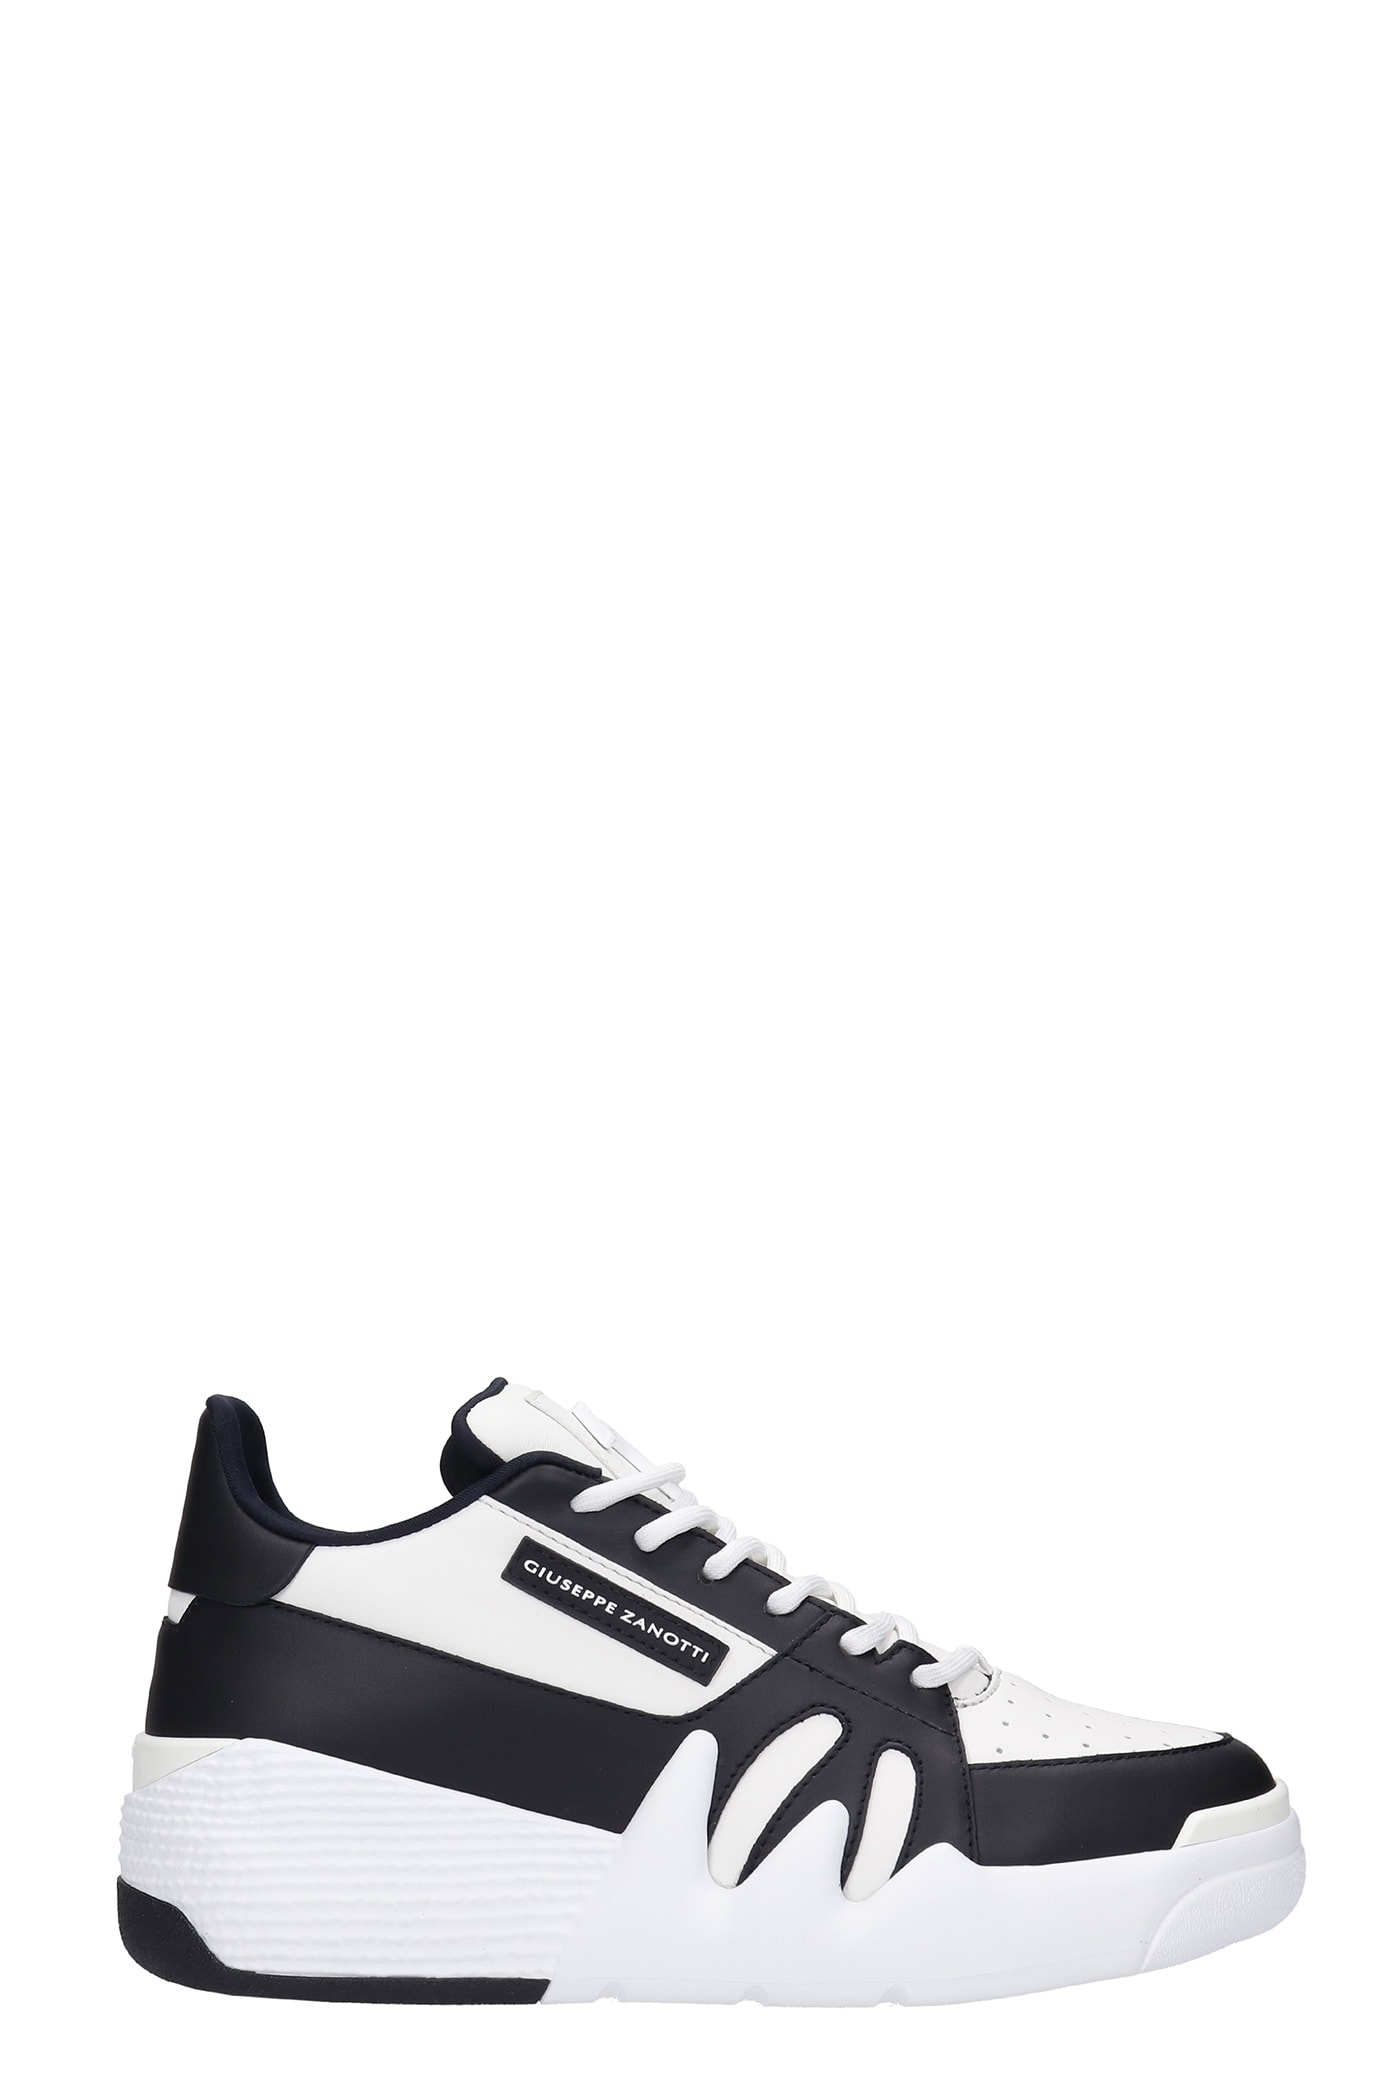 Giuseppe Zanotti Talon Sneakers In Black And White Leather